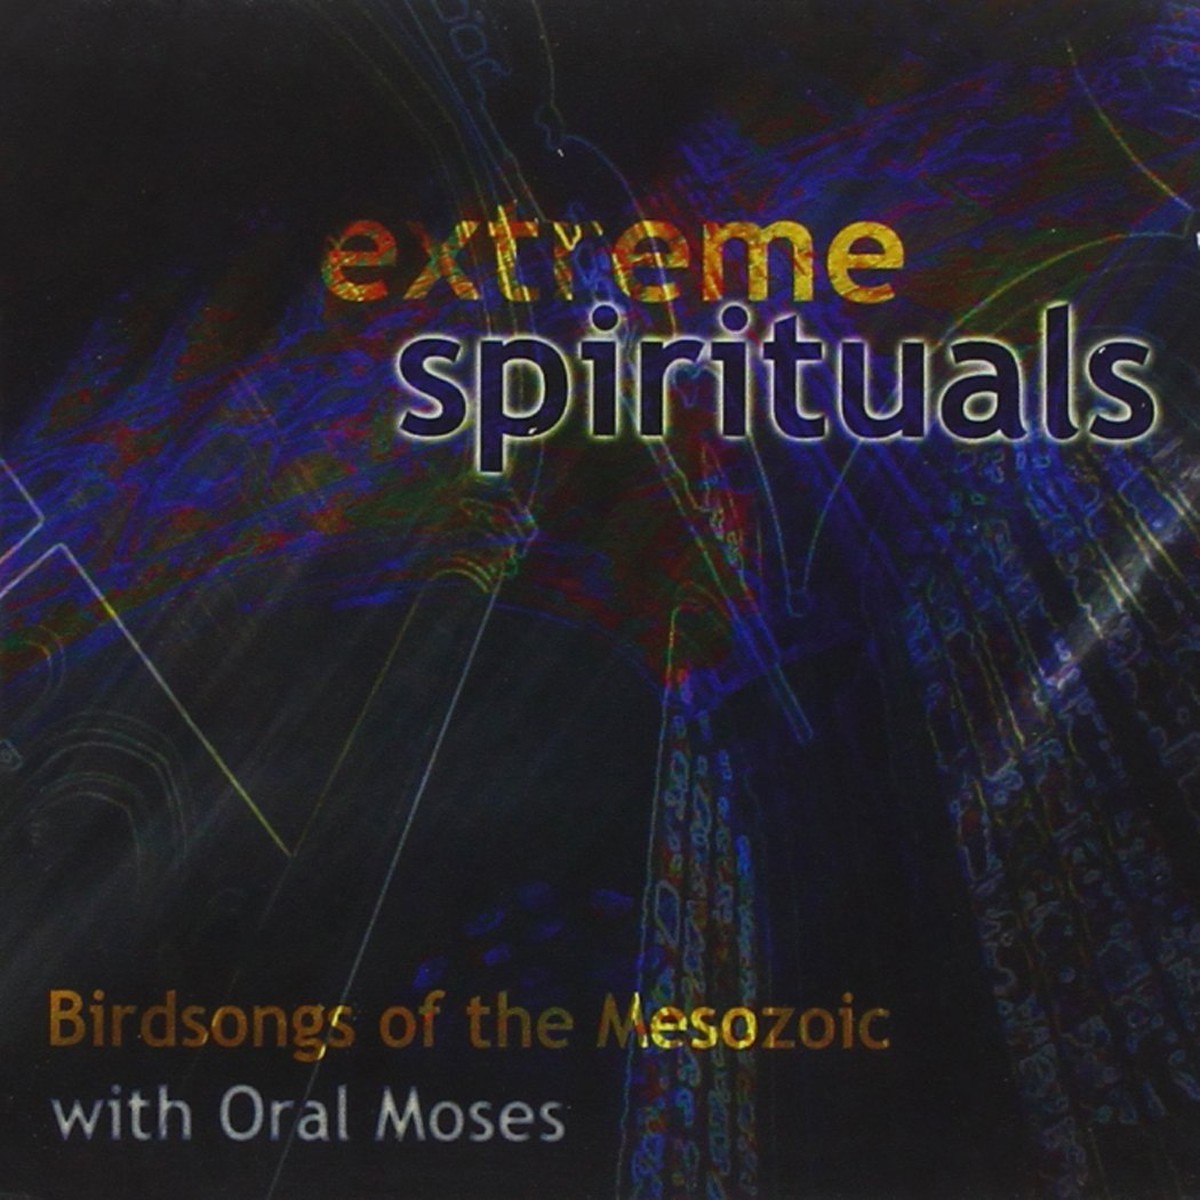 Birdsongs Of The Mesozoic - Extreme Spirituals